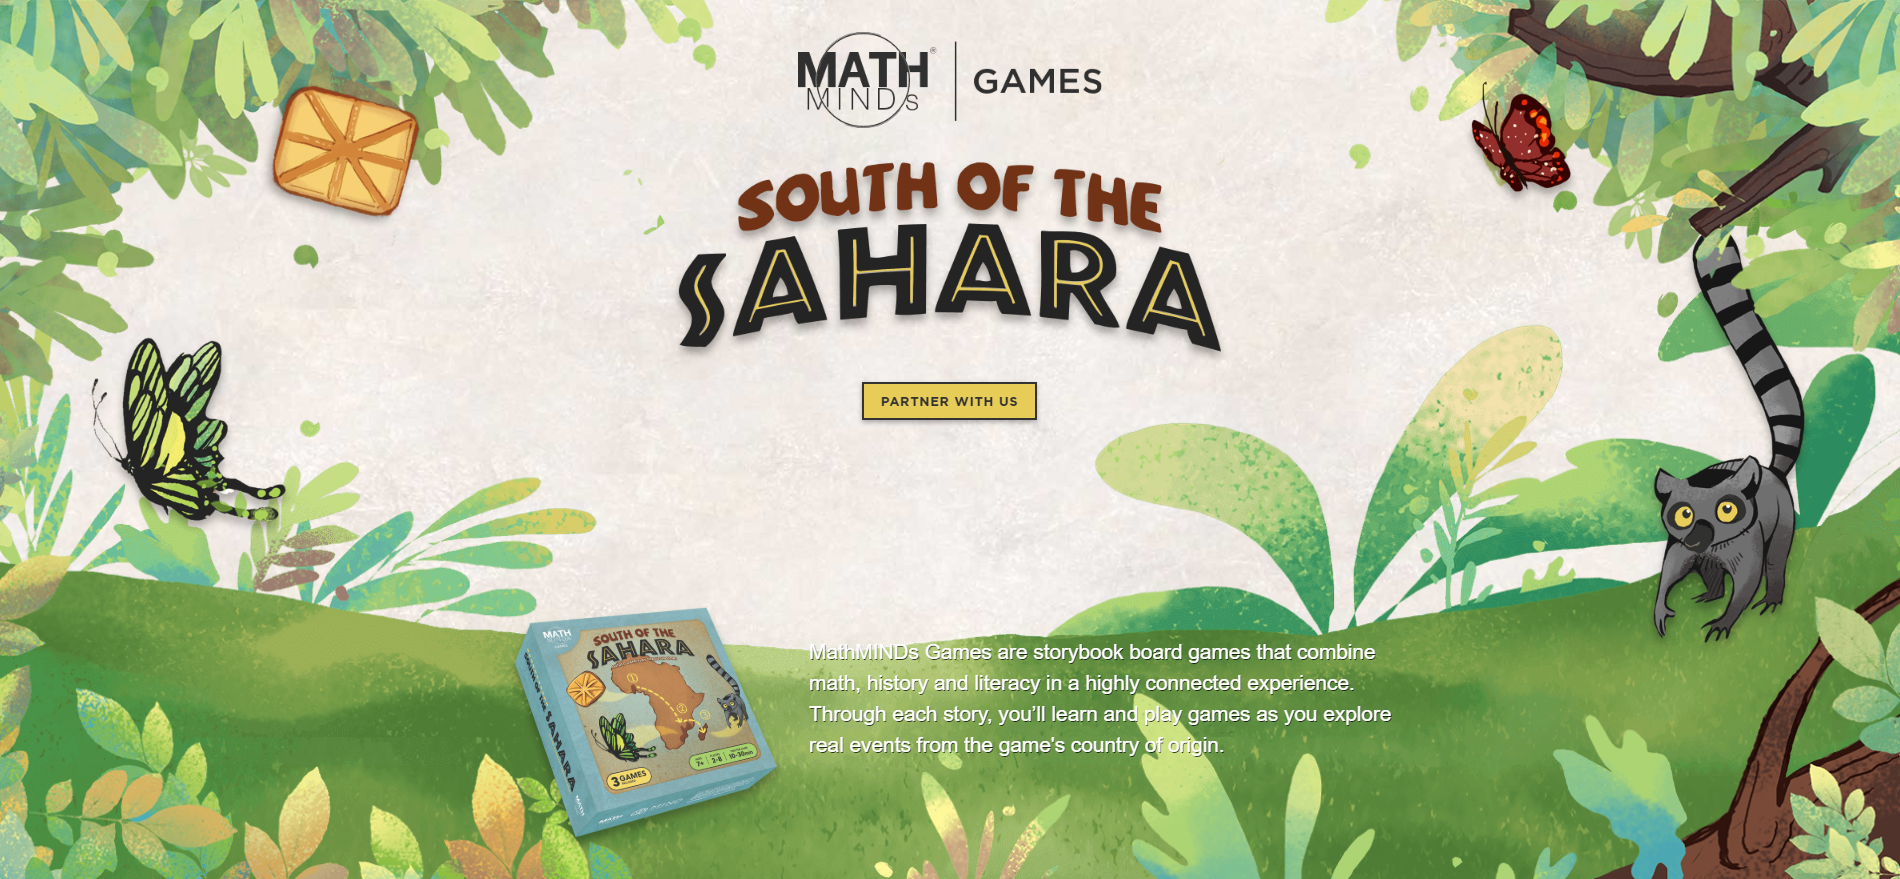 mathminds-games-webpage